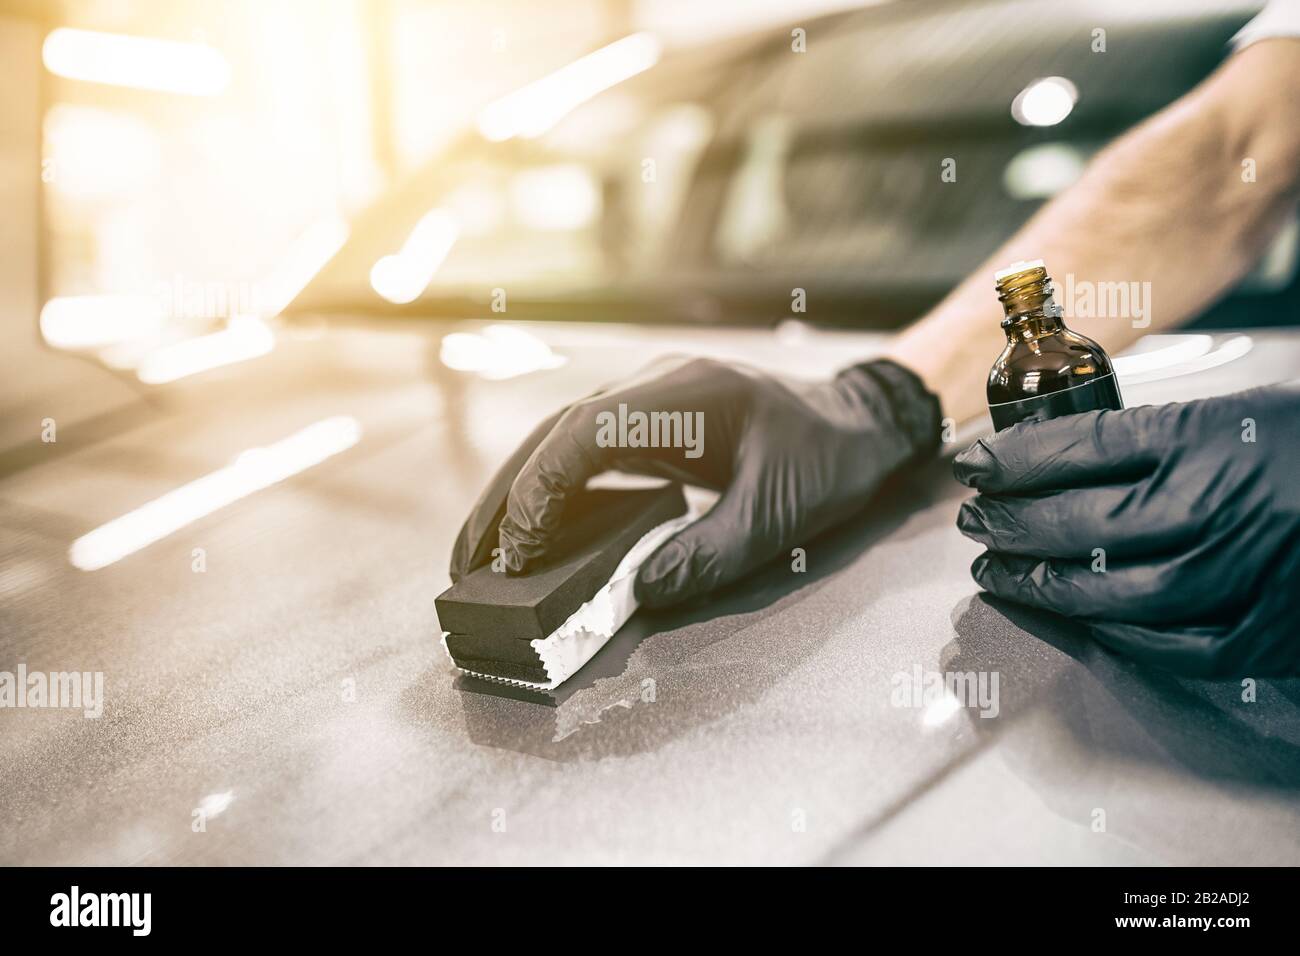 Car detailing - Man applies nano protective coating to the car. Selective focus. Stock Photo